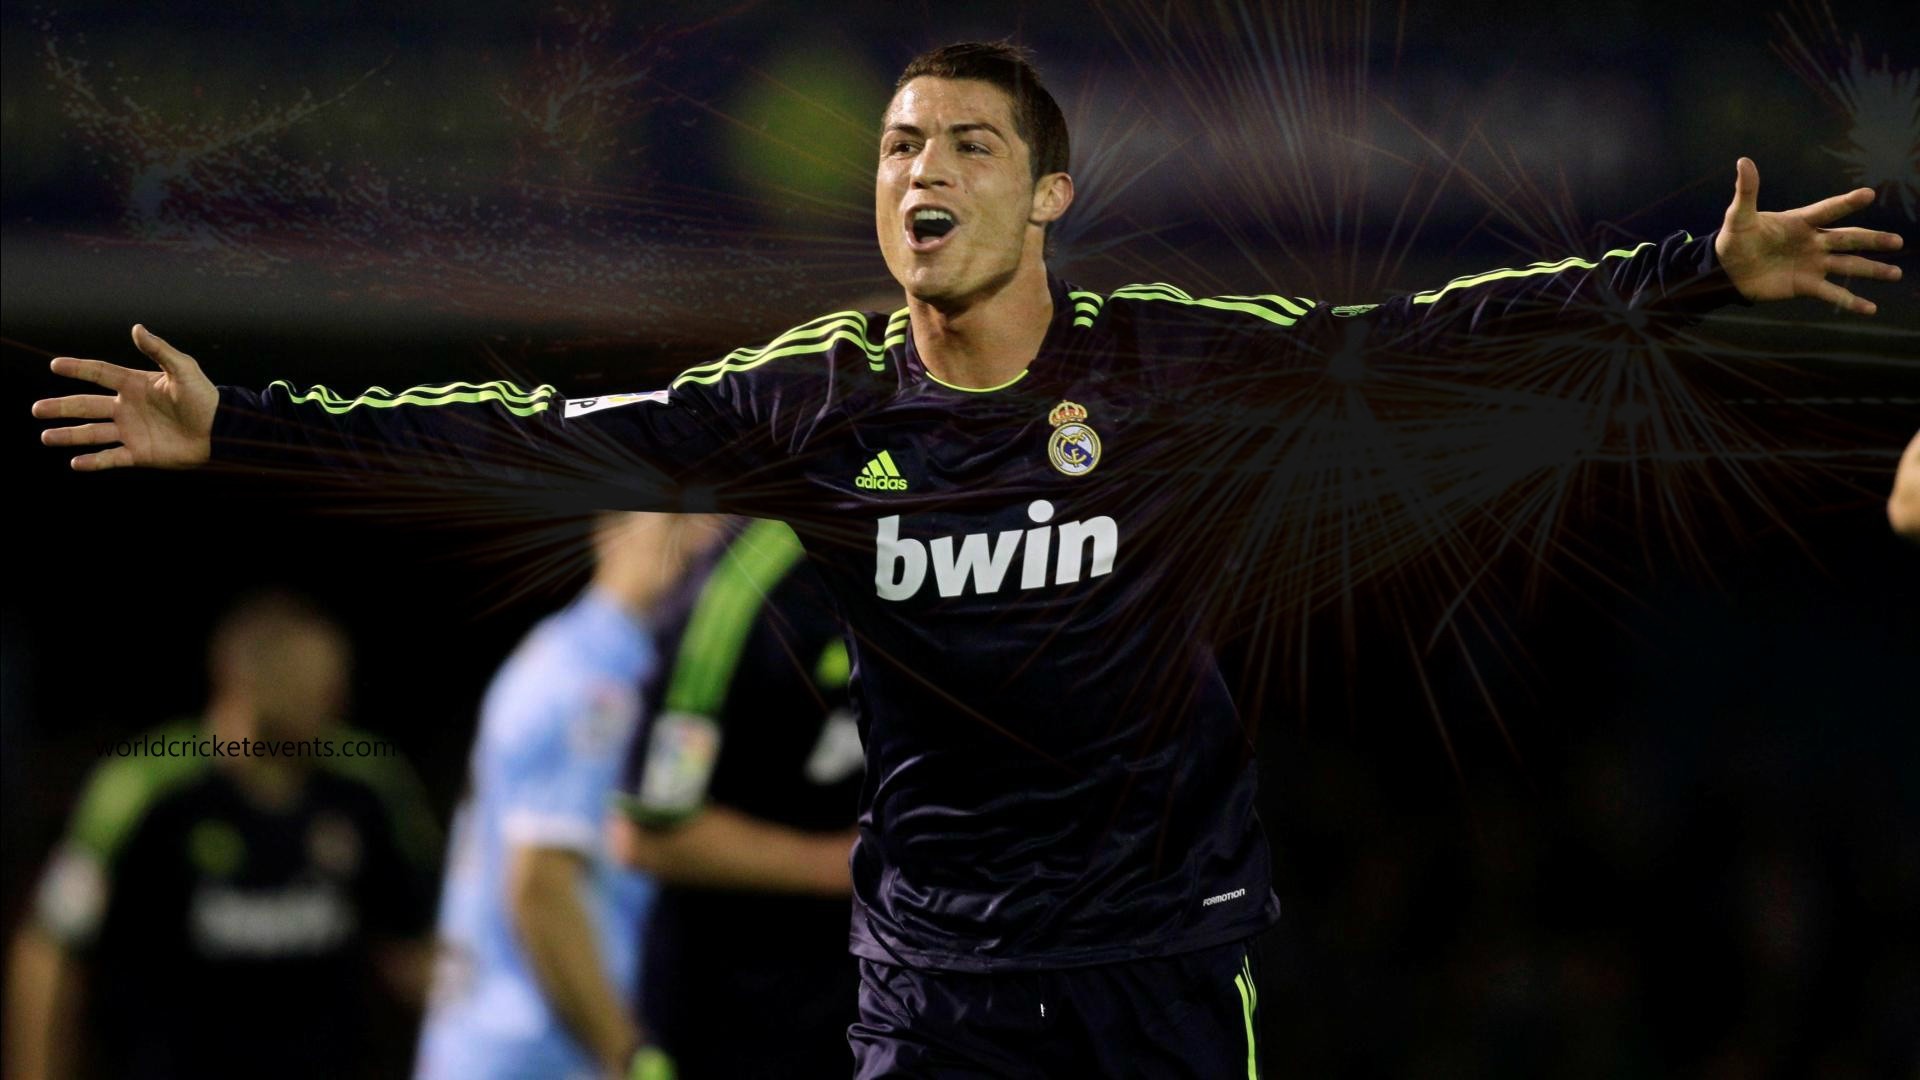 1920x1080 Cristiano Ronaldo Best 30 hd desktop wallpaper  http://worldcricketevents.com/cristiano